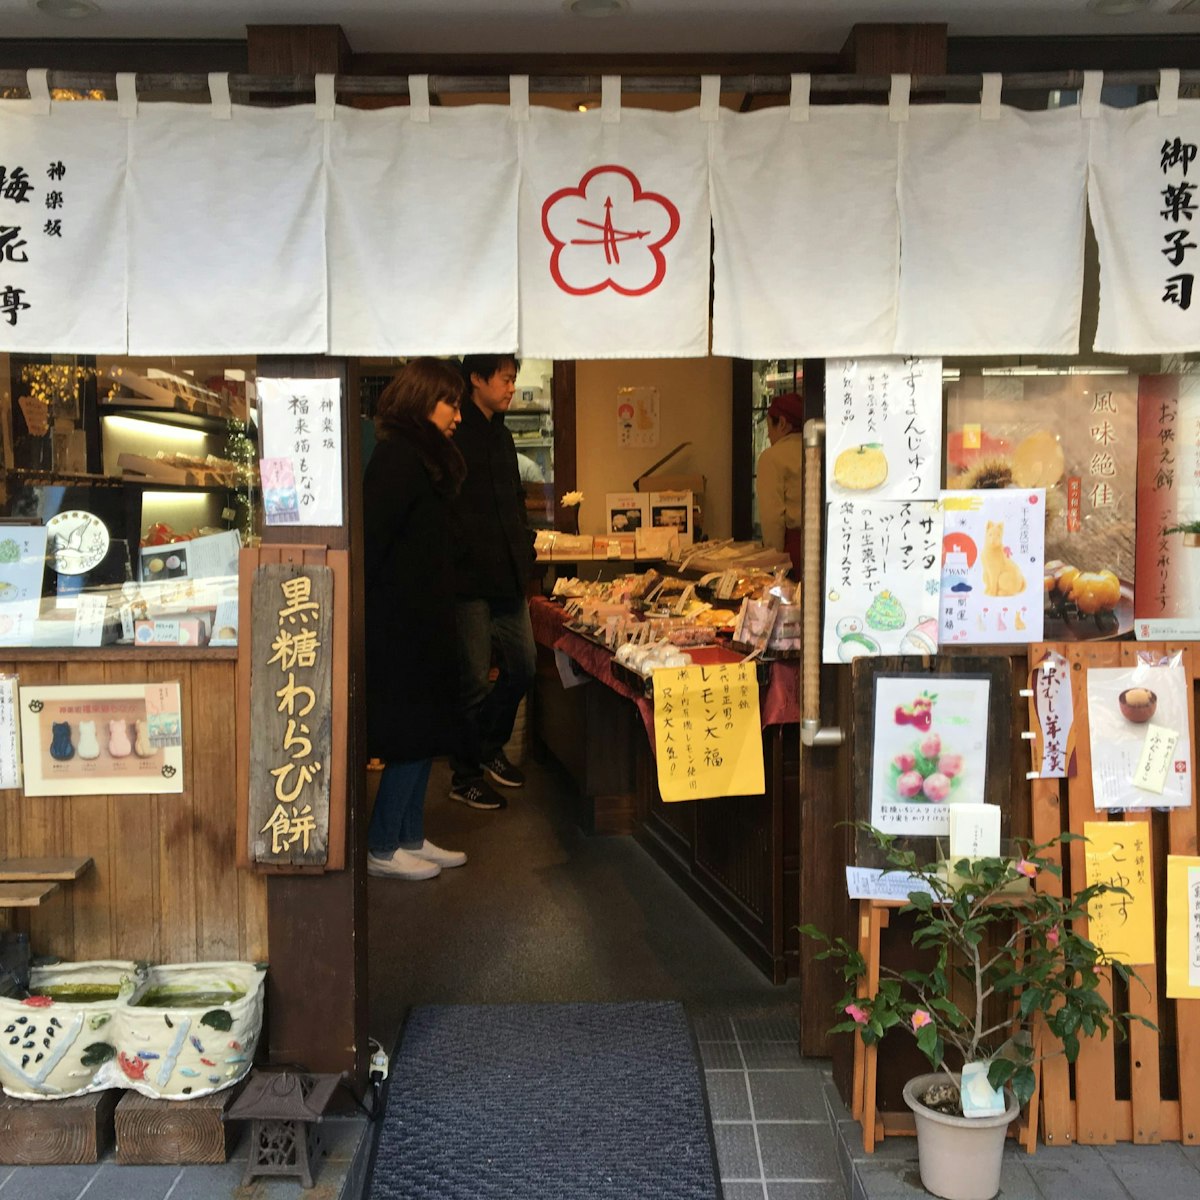 Street entrance to Baikatei sweet shop, Akihabara, Kagurazaka & Korakuen.